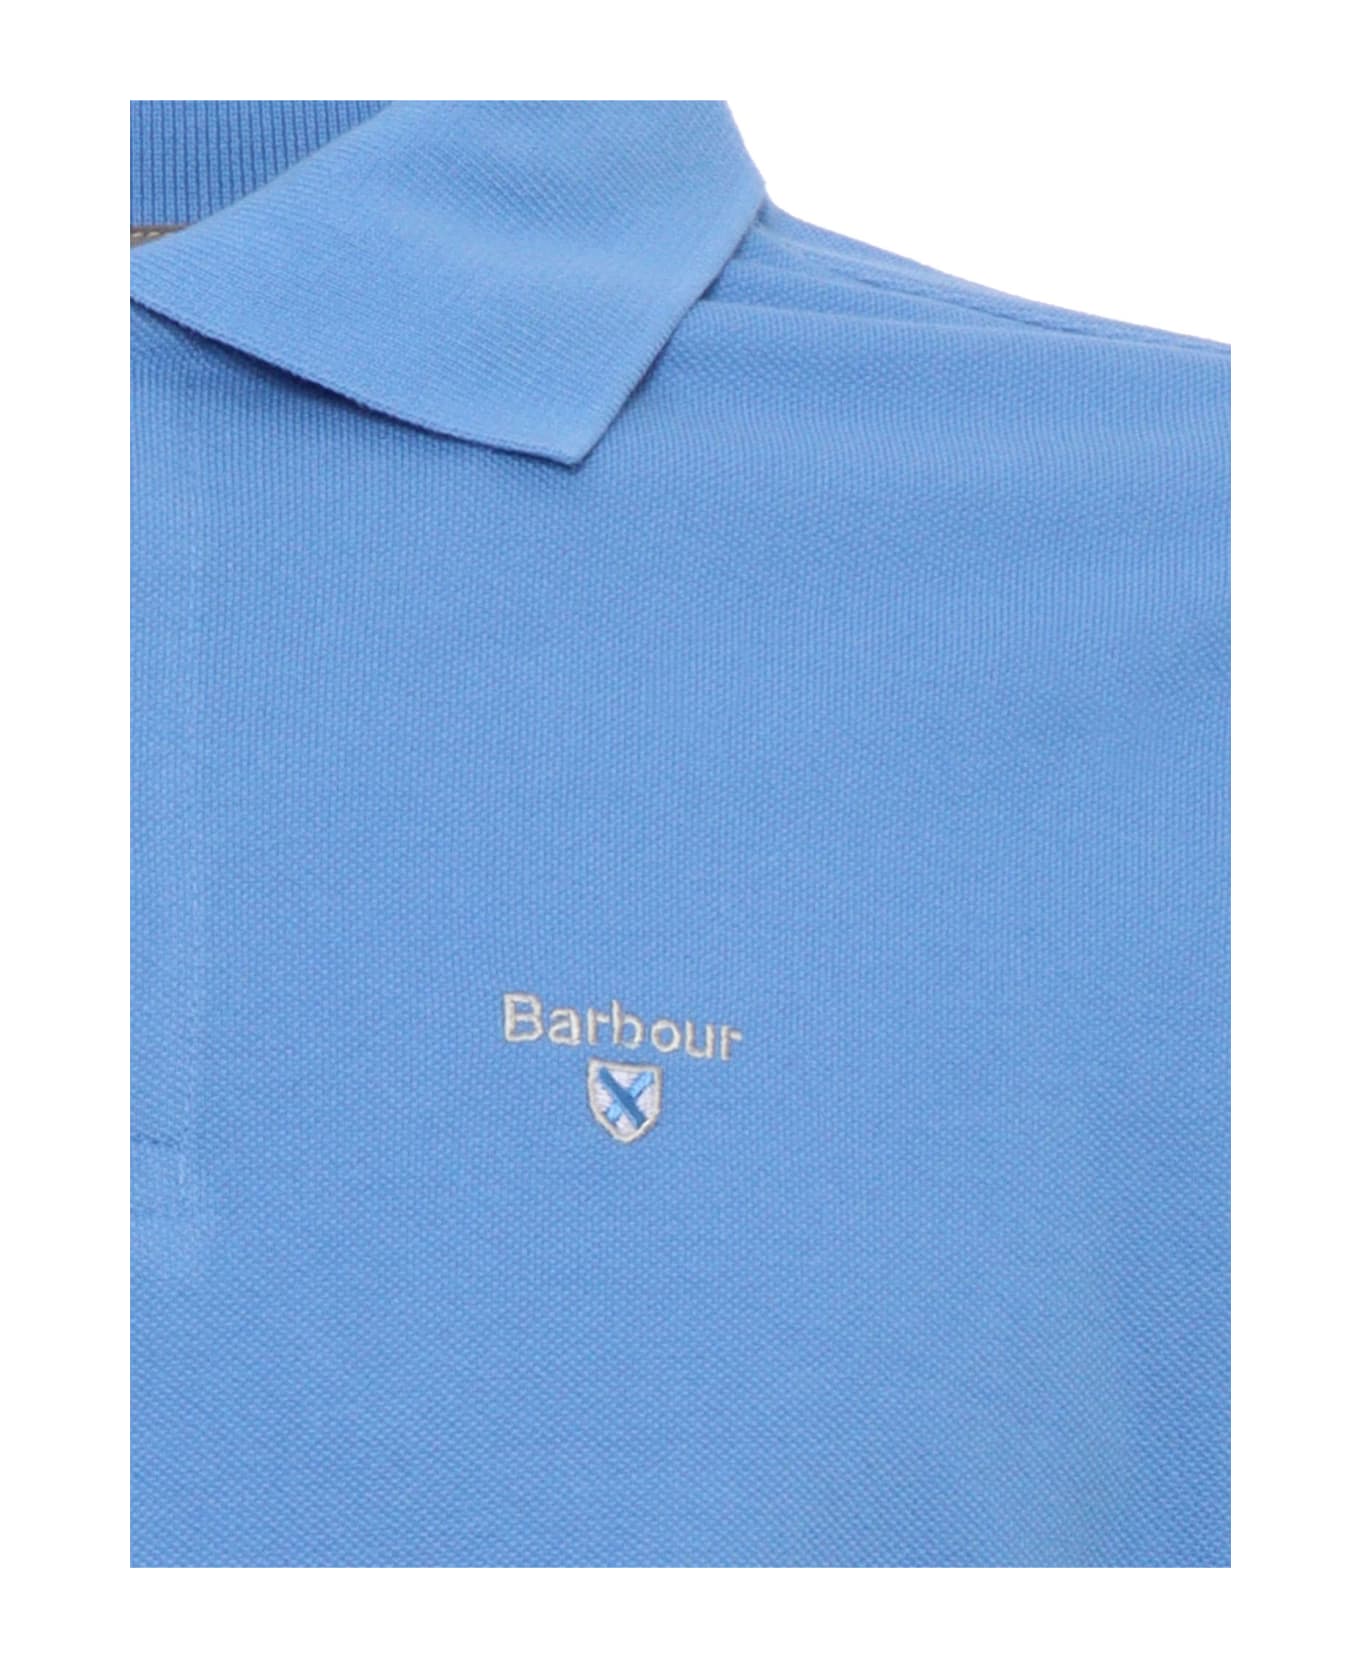 Barbour Light Blue Polo - Delft Blue ポロシャツ